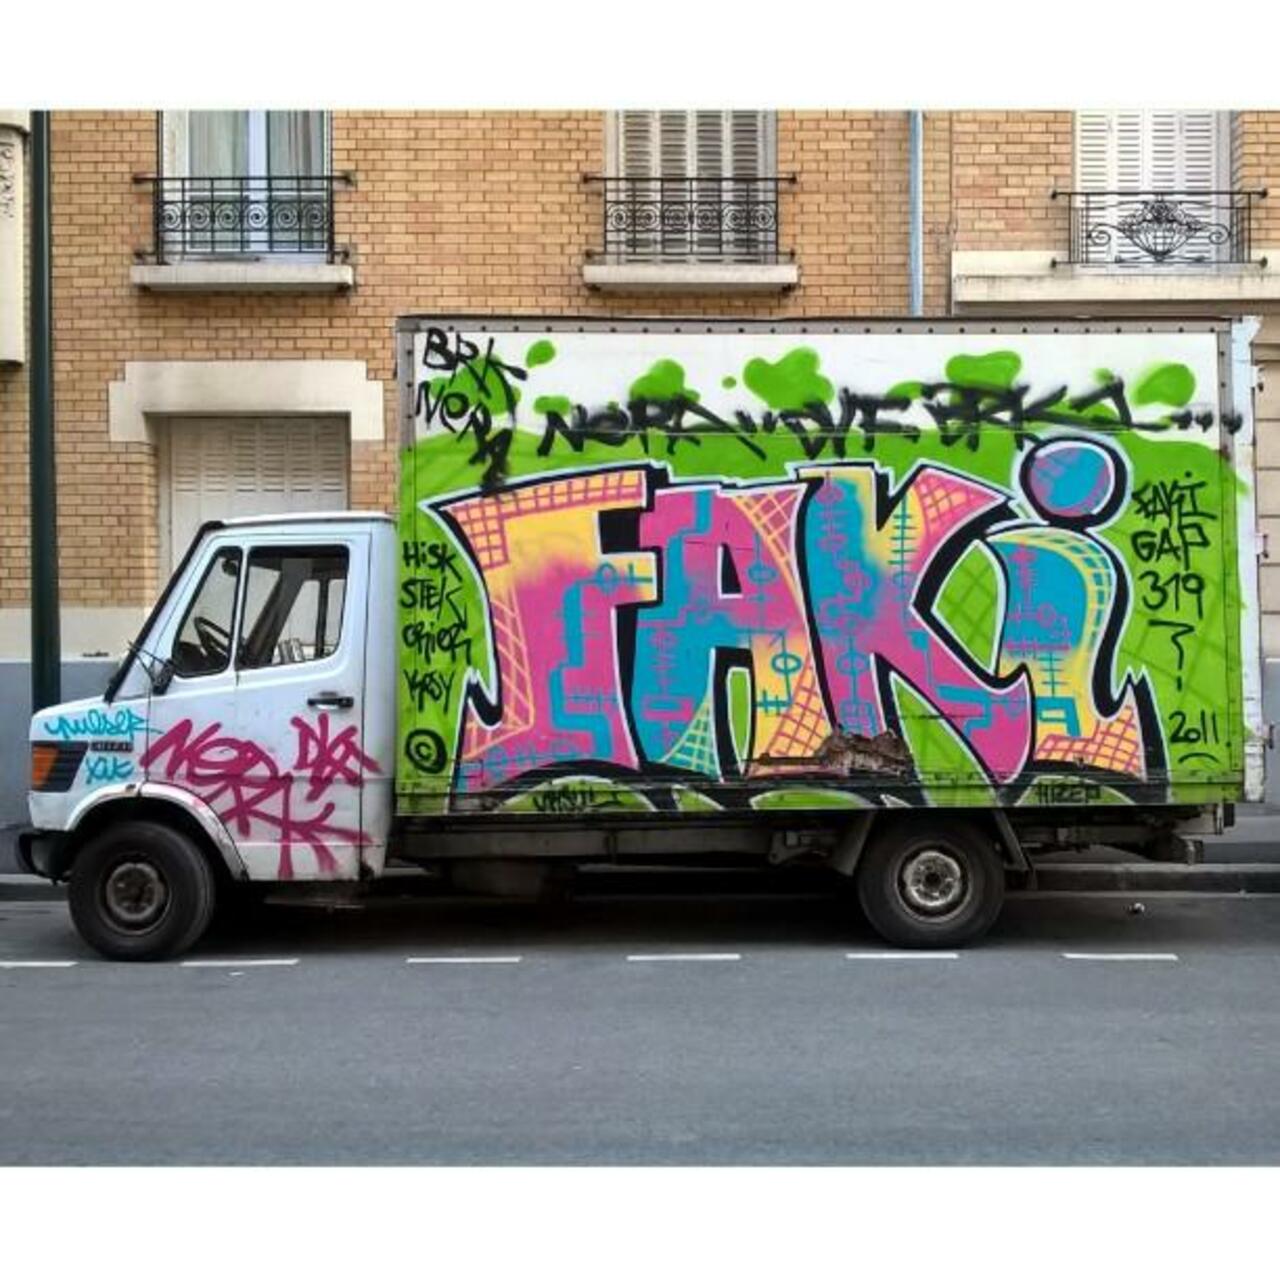 circumjacent_fr: #Paris #graffiti photo by maxdimontemarciano http://ift.tt/1jlA9Ra #StreetArt http://t.co/mCNnhvbTDx